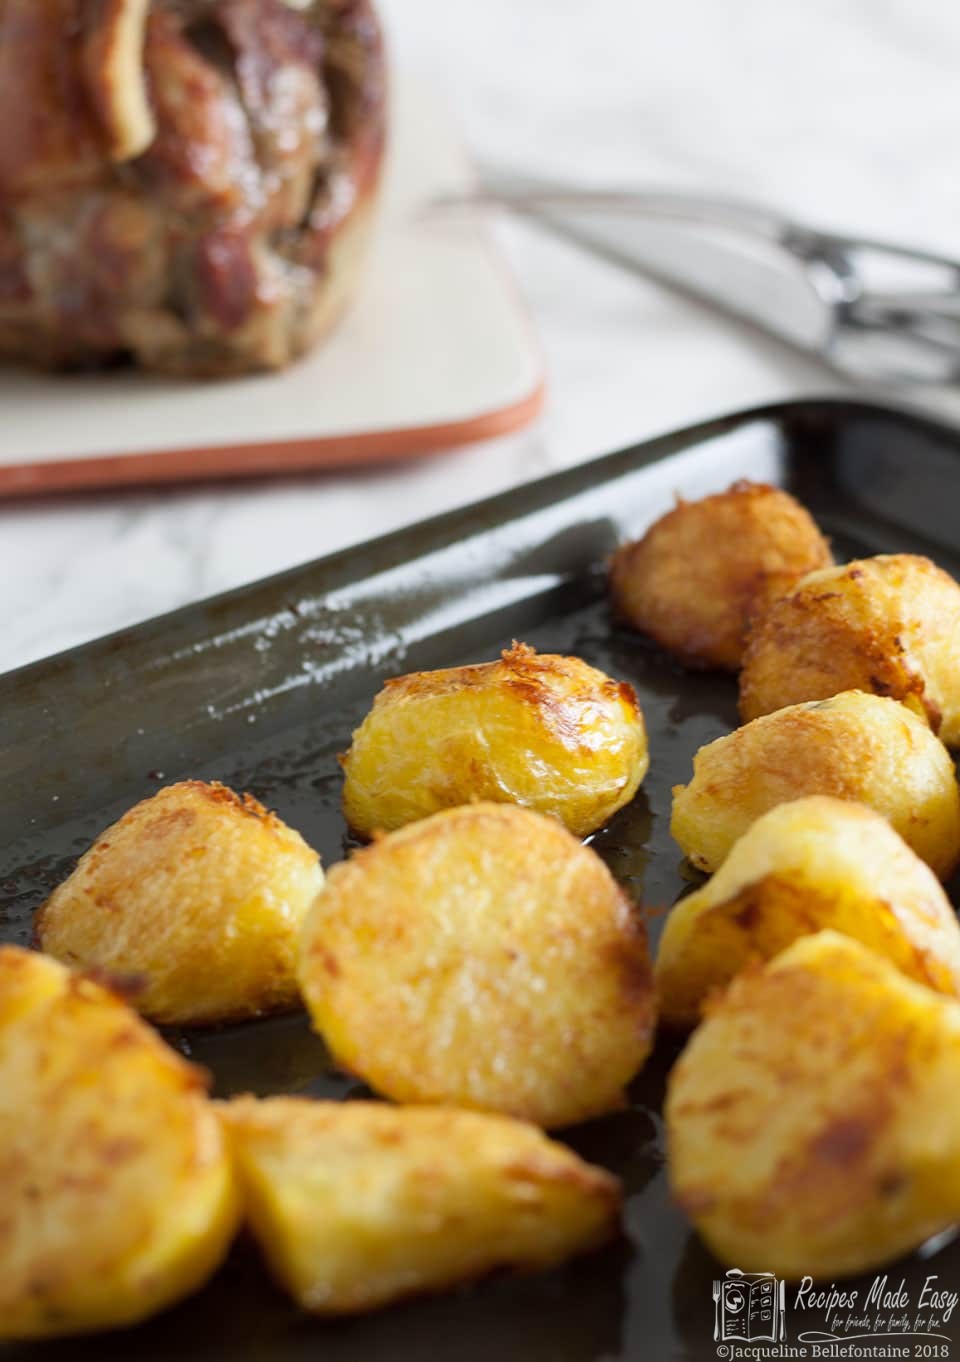 baked potatoes without lard